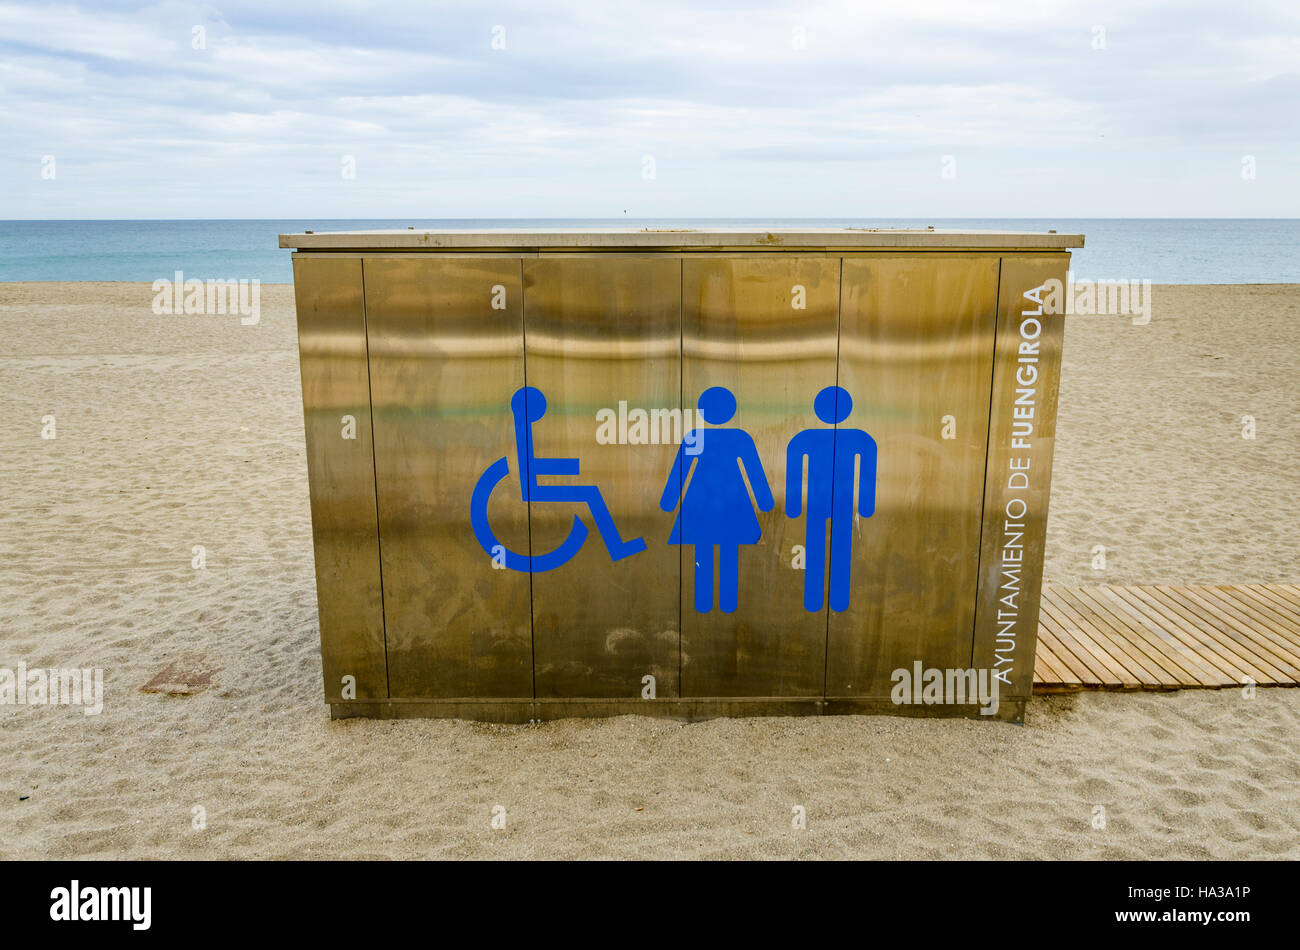 Public toilet on beach. cabin, Fuengirola, Costa del Sol, Southern Spain Stock Photo